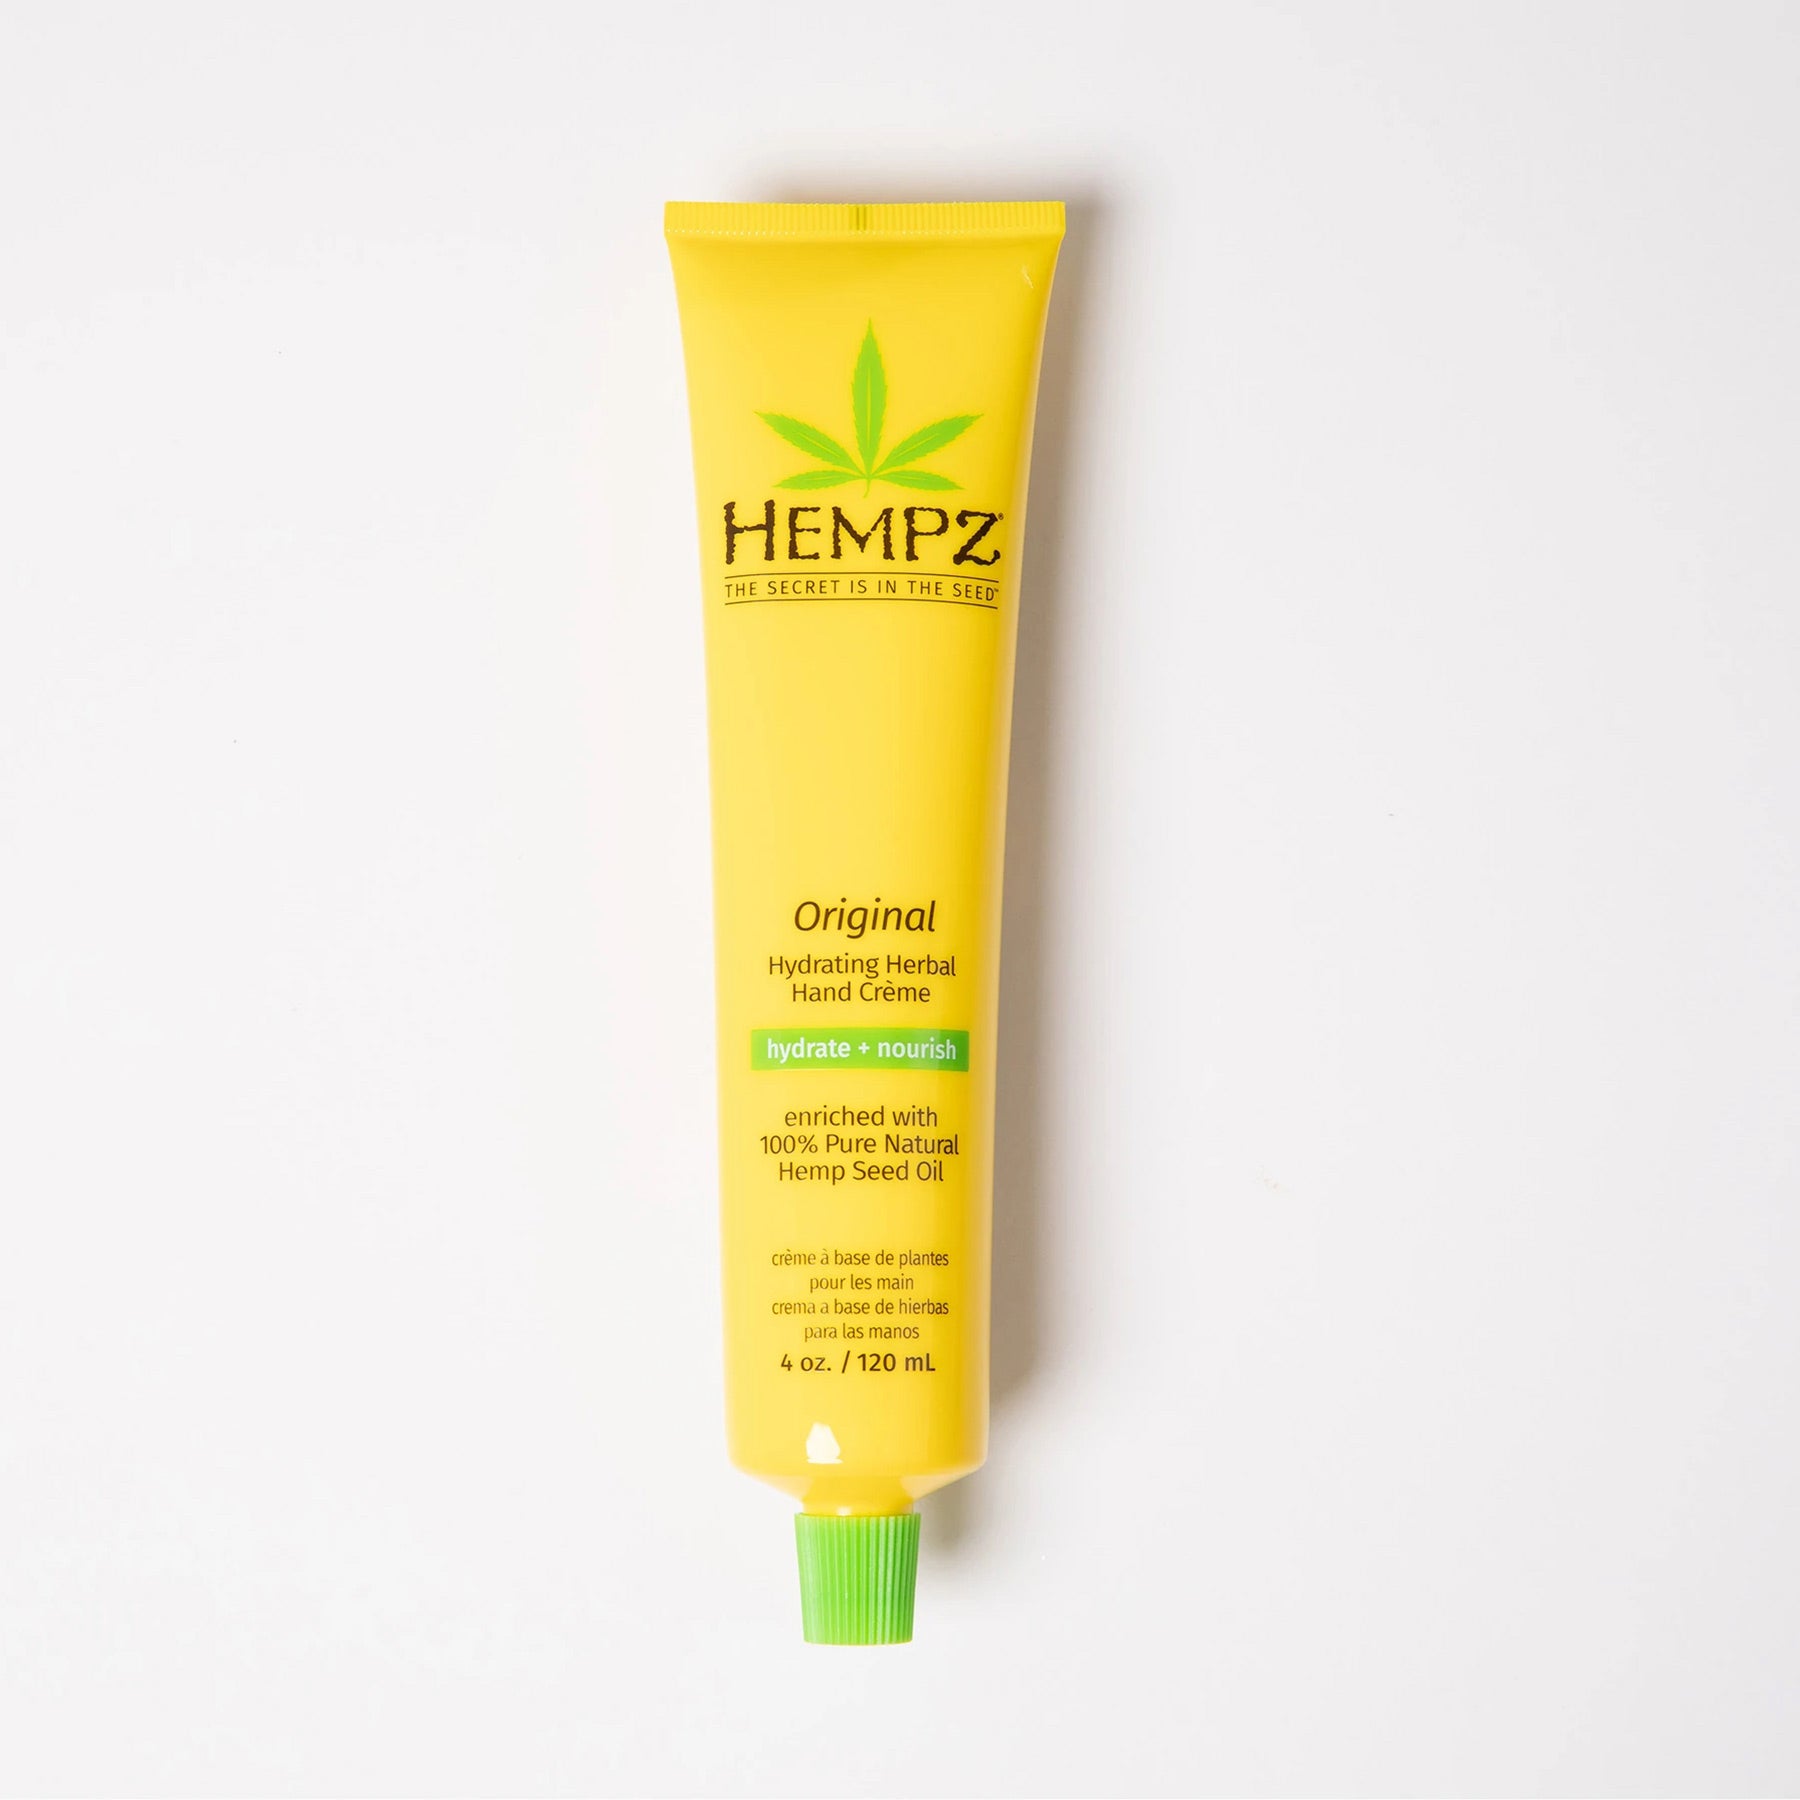 Hempz Original Hydrating Herbal Hand Creme